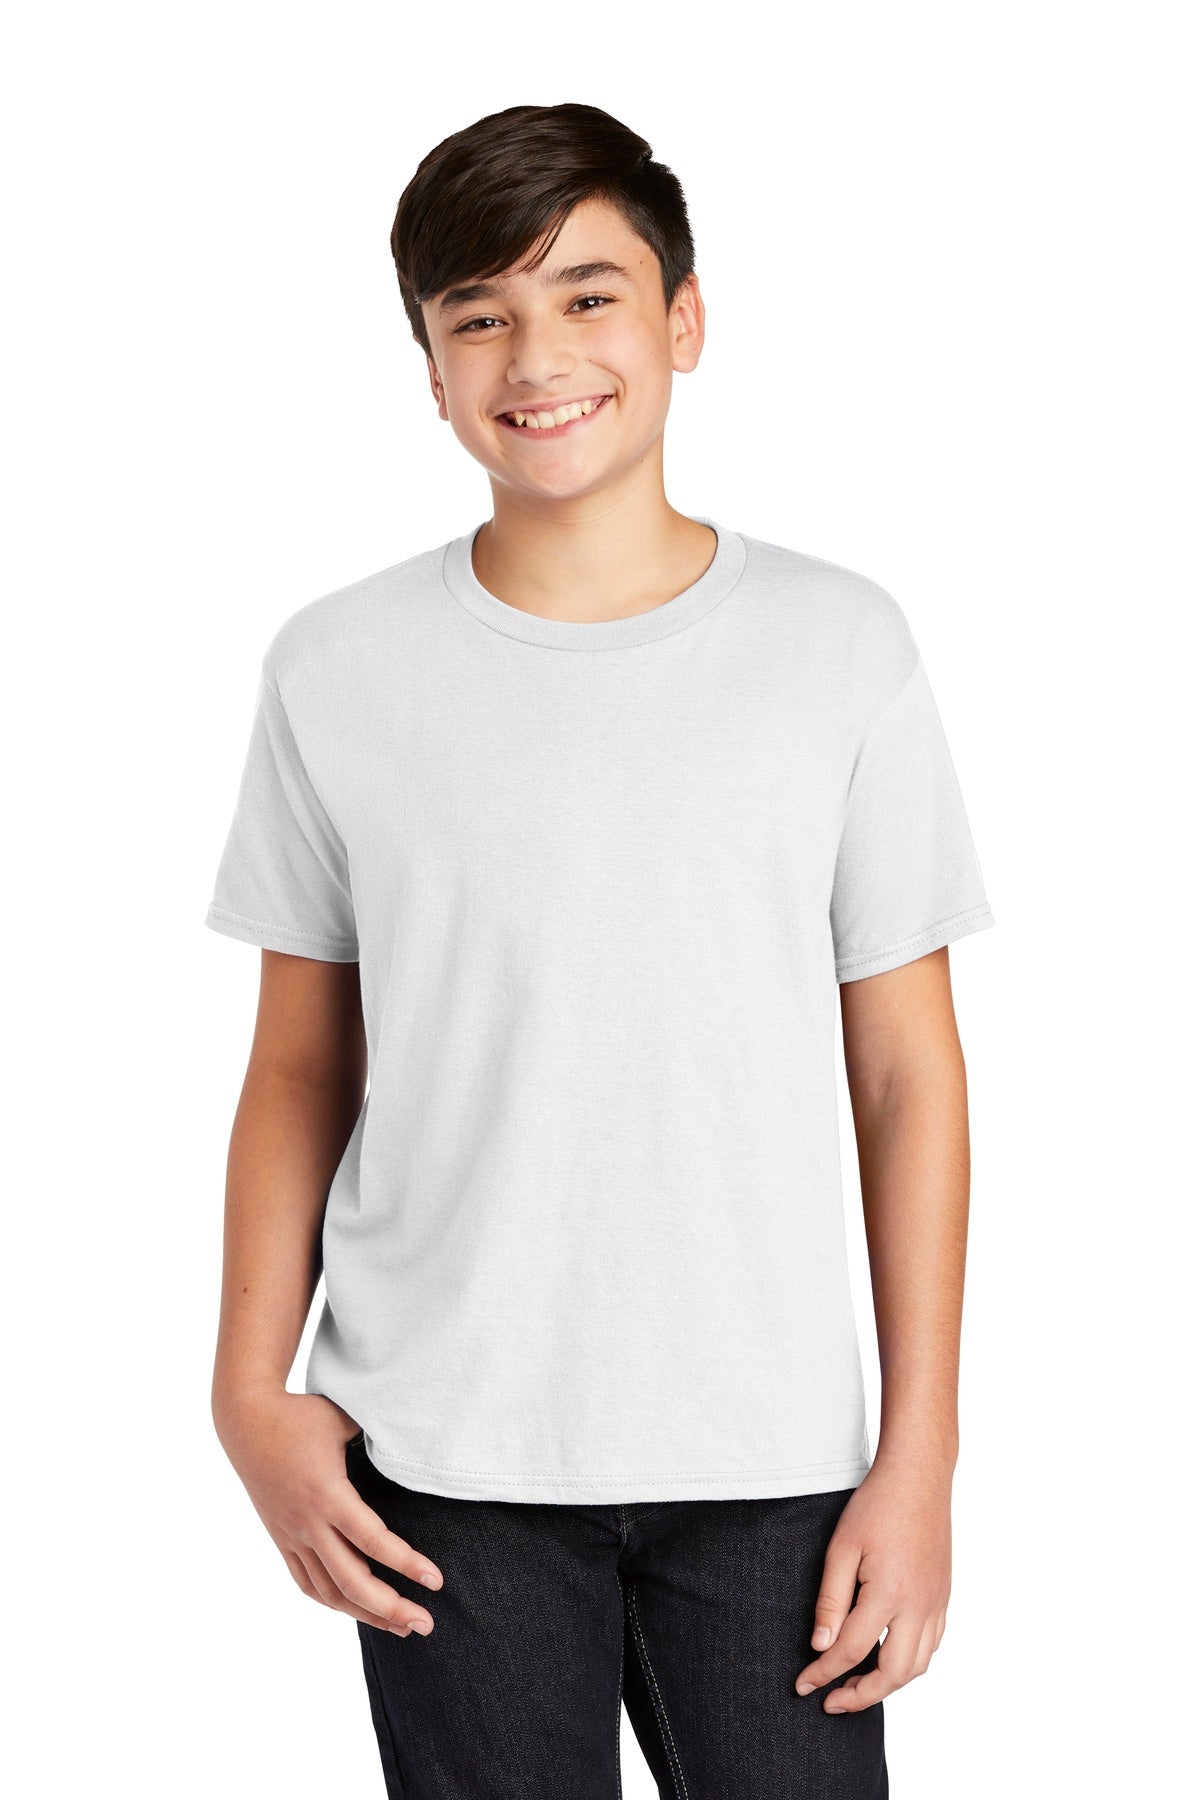 Anvil ® Youth 100% Combed Ring Spun Cotton T-Shirt 990B